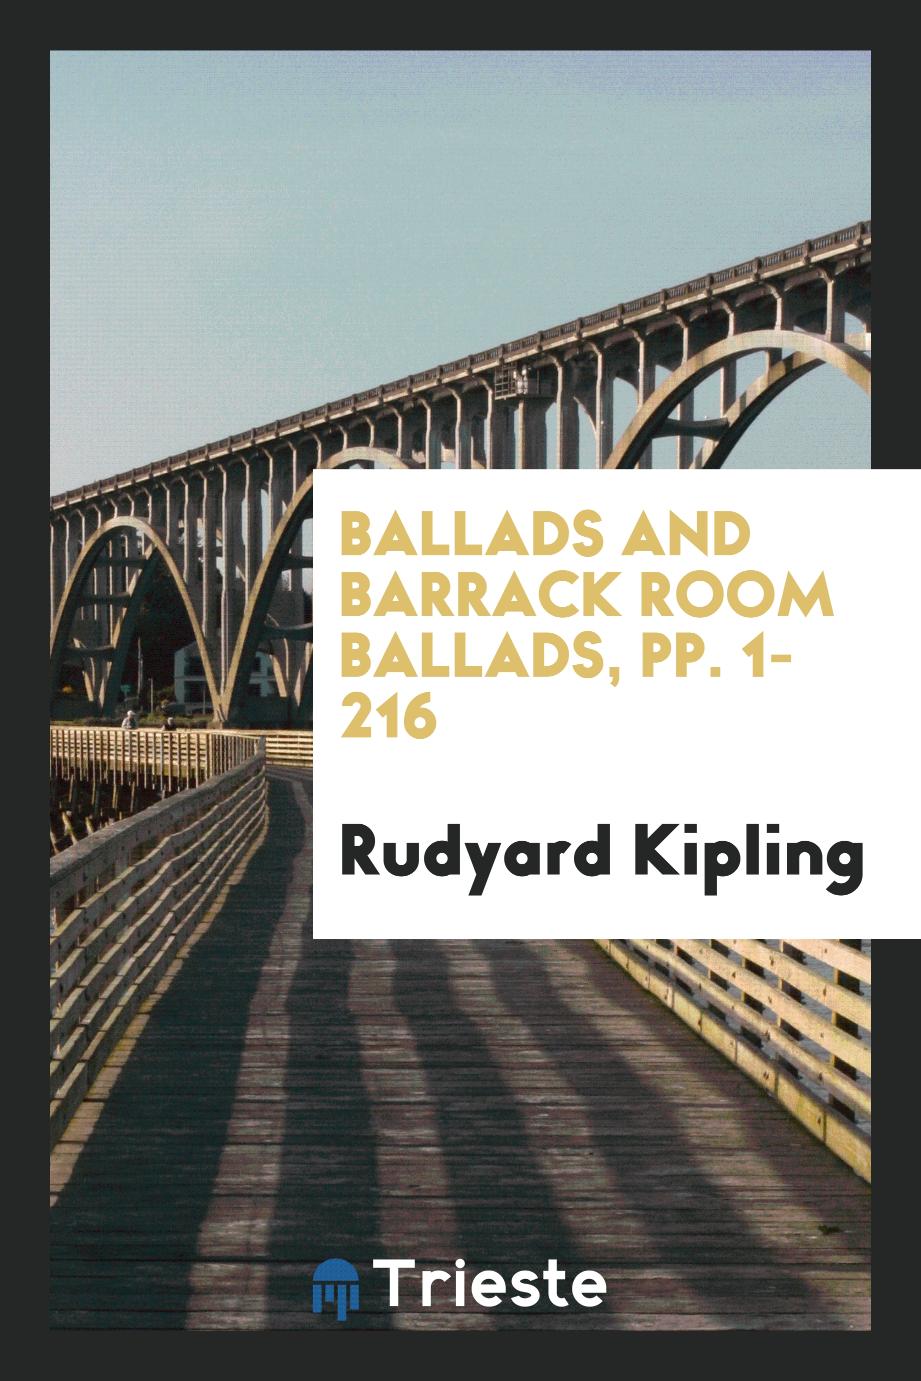 Ballads and Barrack Room Ballads, pp. 1-216